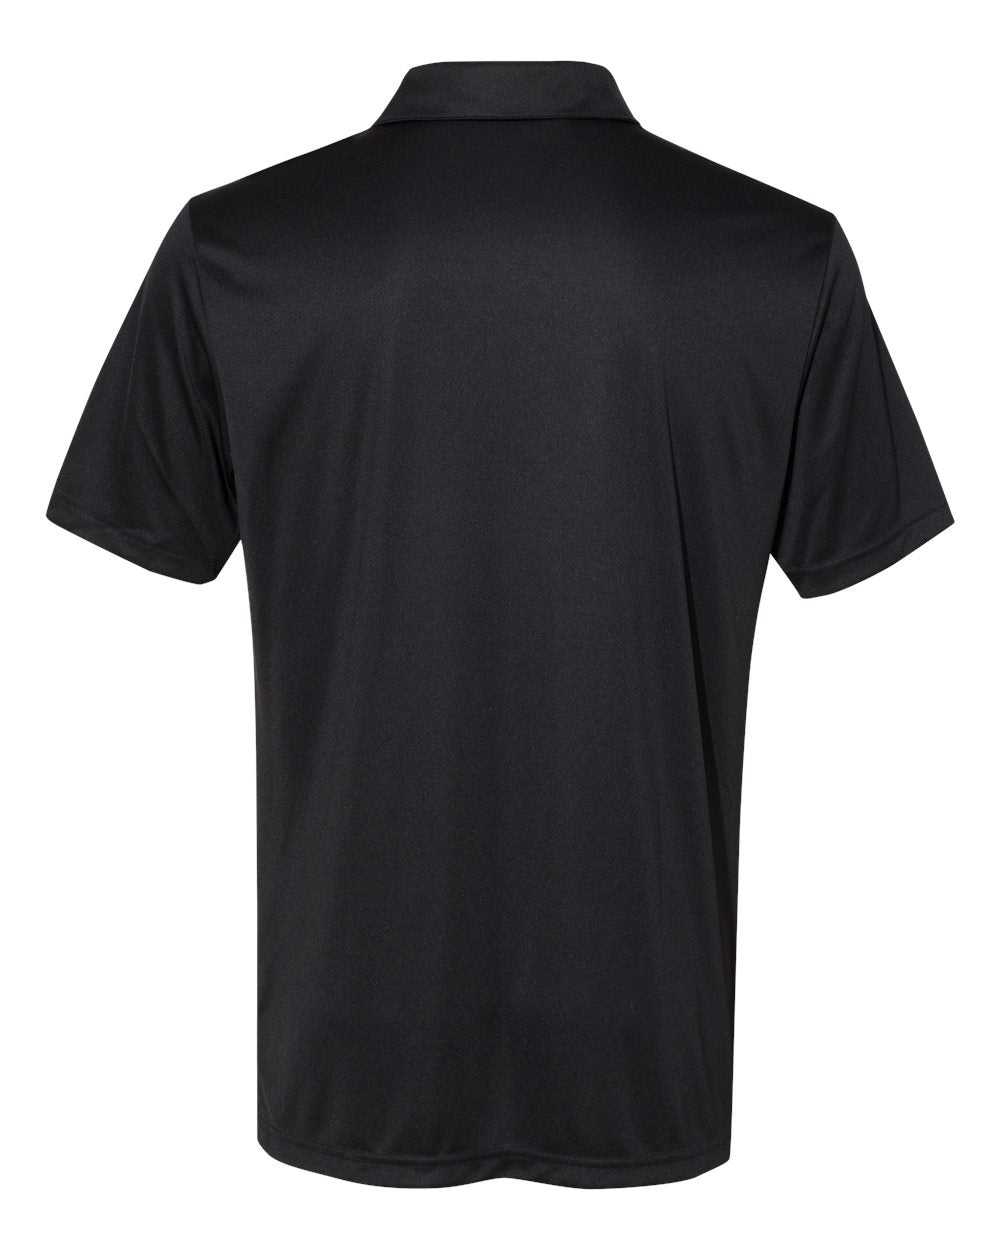 Adidas A236 Merch Block Sport Shirt - Black Grey Three Grey Five - HIT a Double